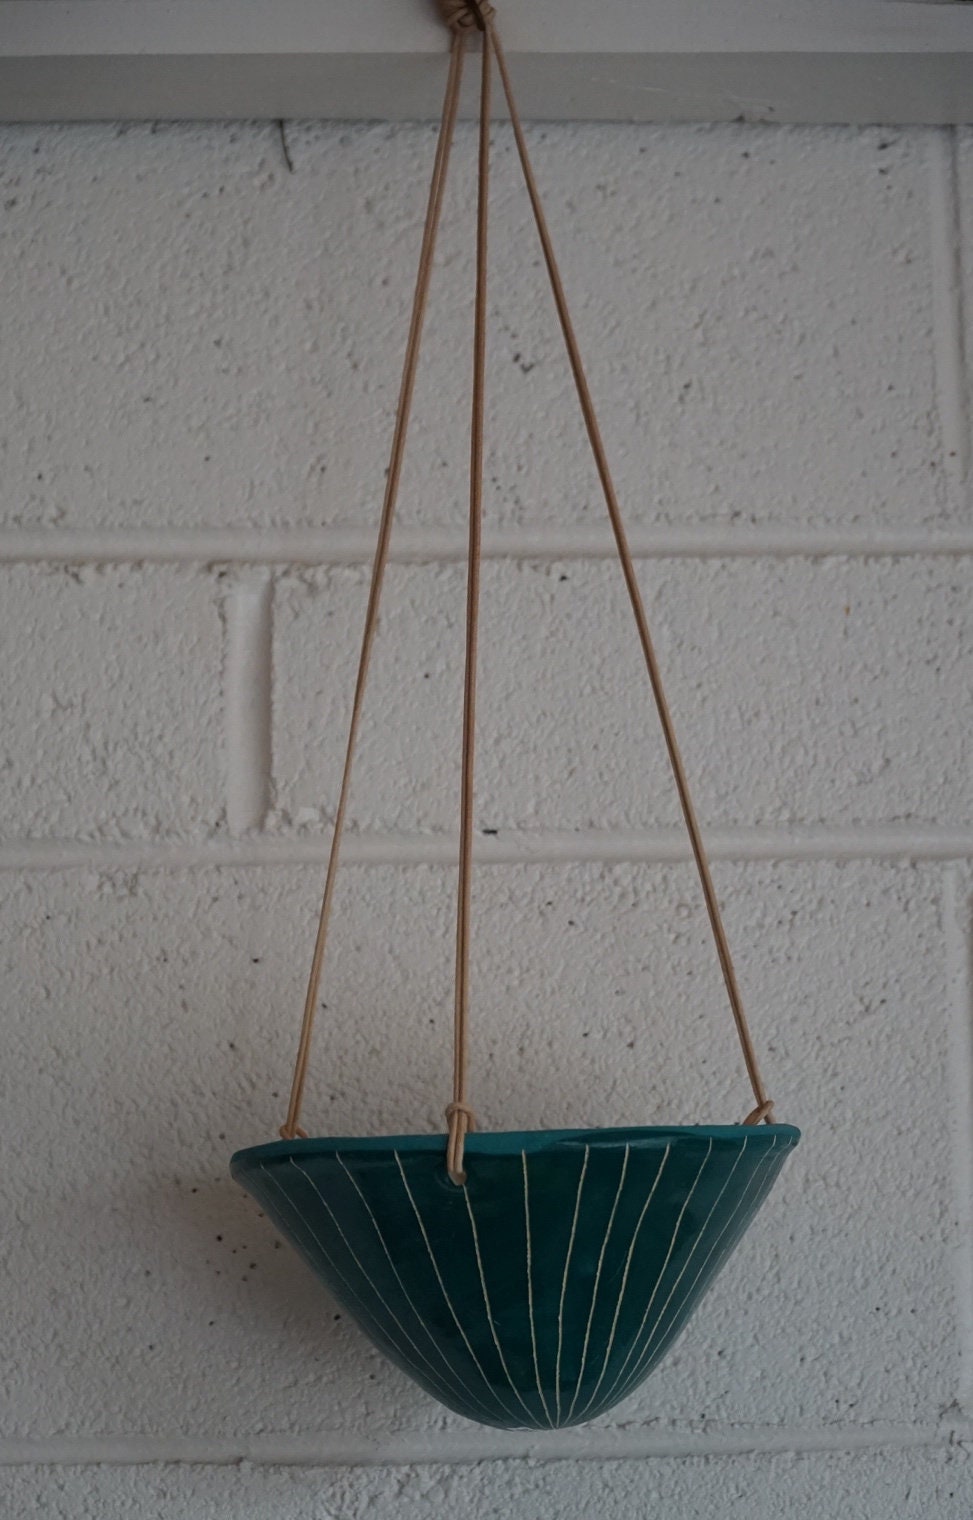 Teal & White Glazed Hanging Planter w/ "Vertical Line" Design - Hanging Pot w/ Carved Design - Succulent, Cactus, Herb, Air Plant, Etc